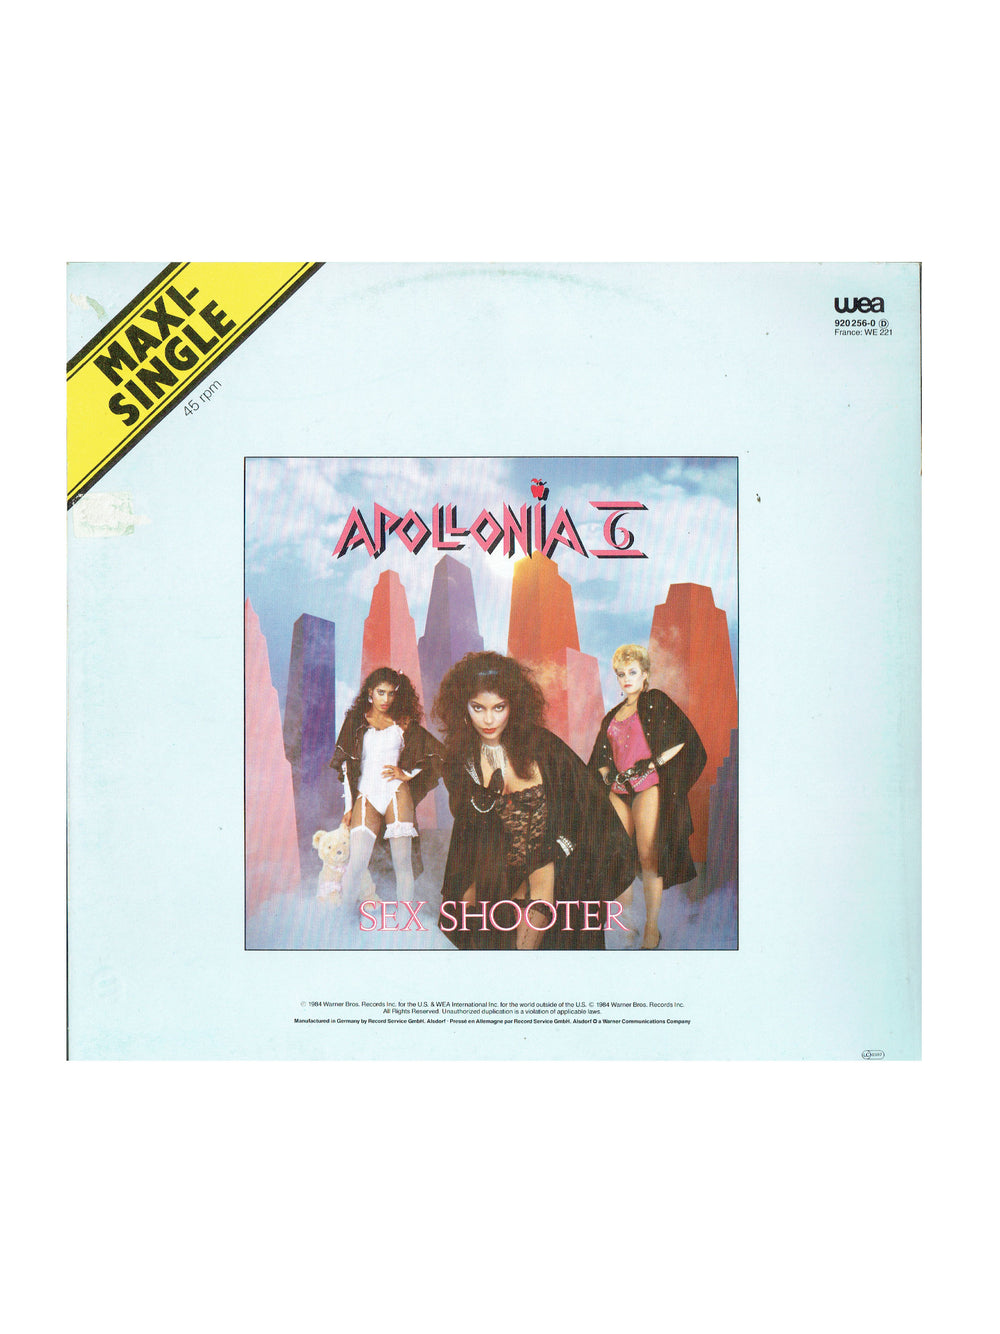 Prince – Apollonia 6 Sex Shooter 12 Inch Vinyl Europe 1984 Release WE221 AS